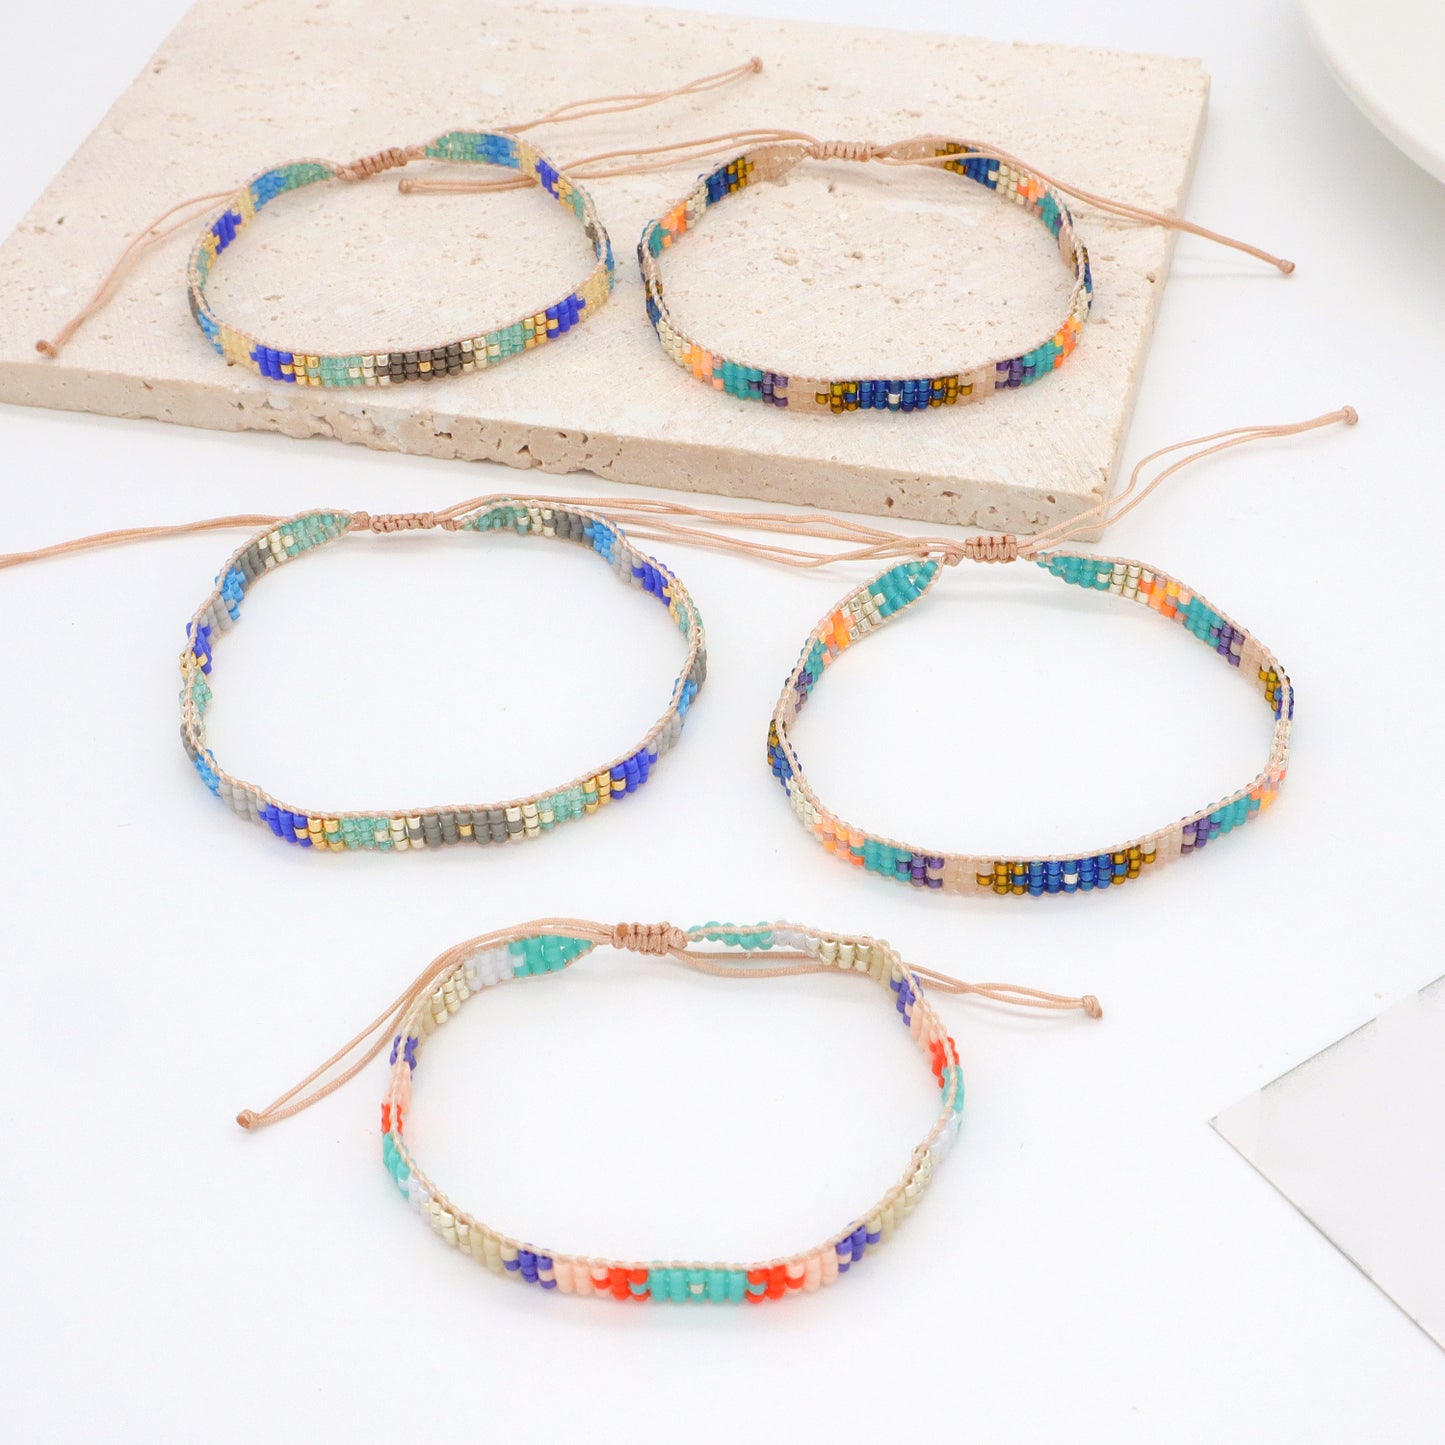 New Colorful Miyuki Jewelry Multicolor Beads bracelet bangle Fashion adjustable Handmade Custom Woven Miyuki boho Bracelet